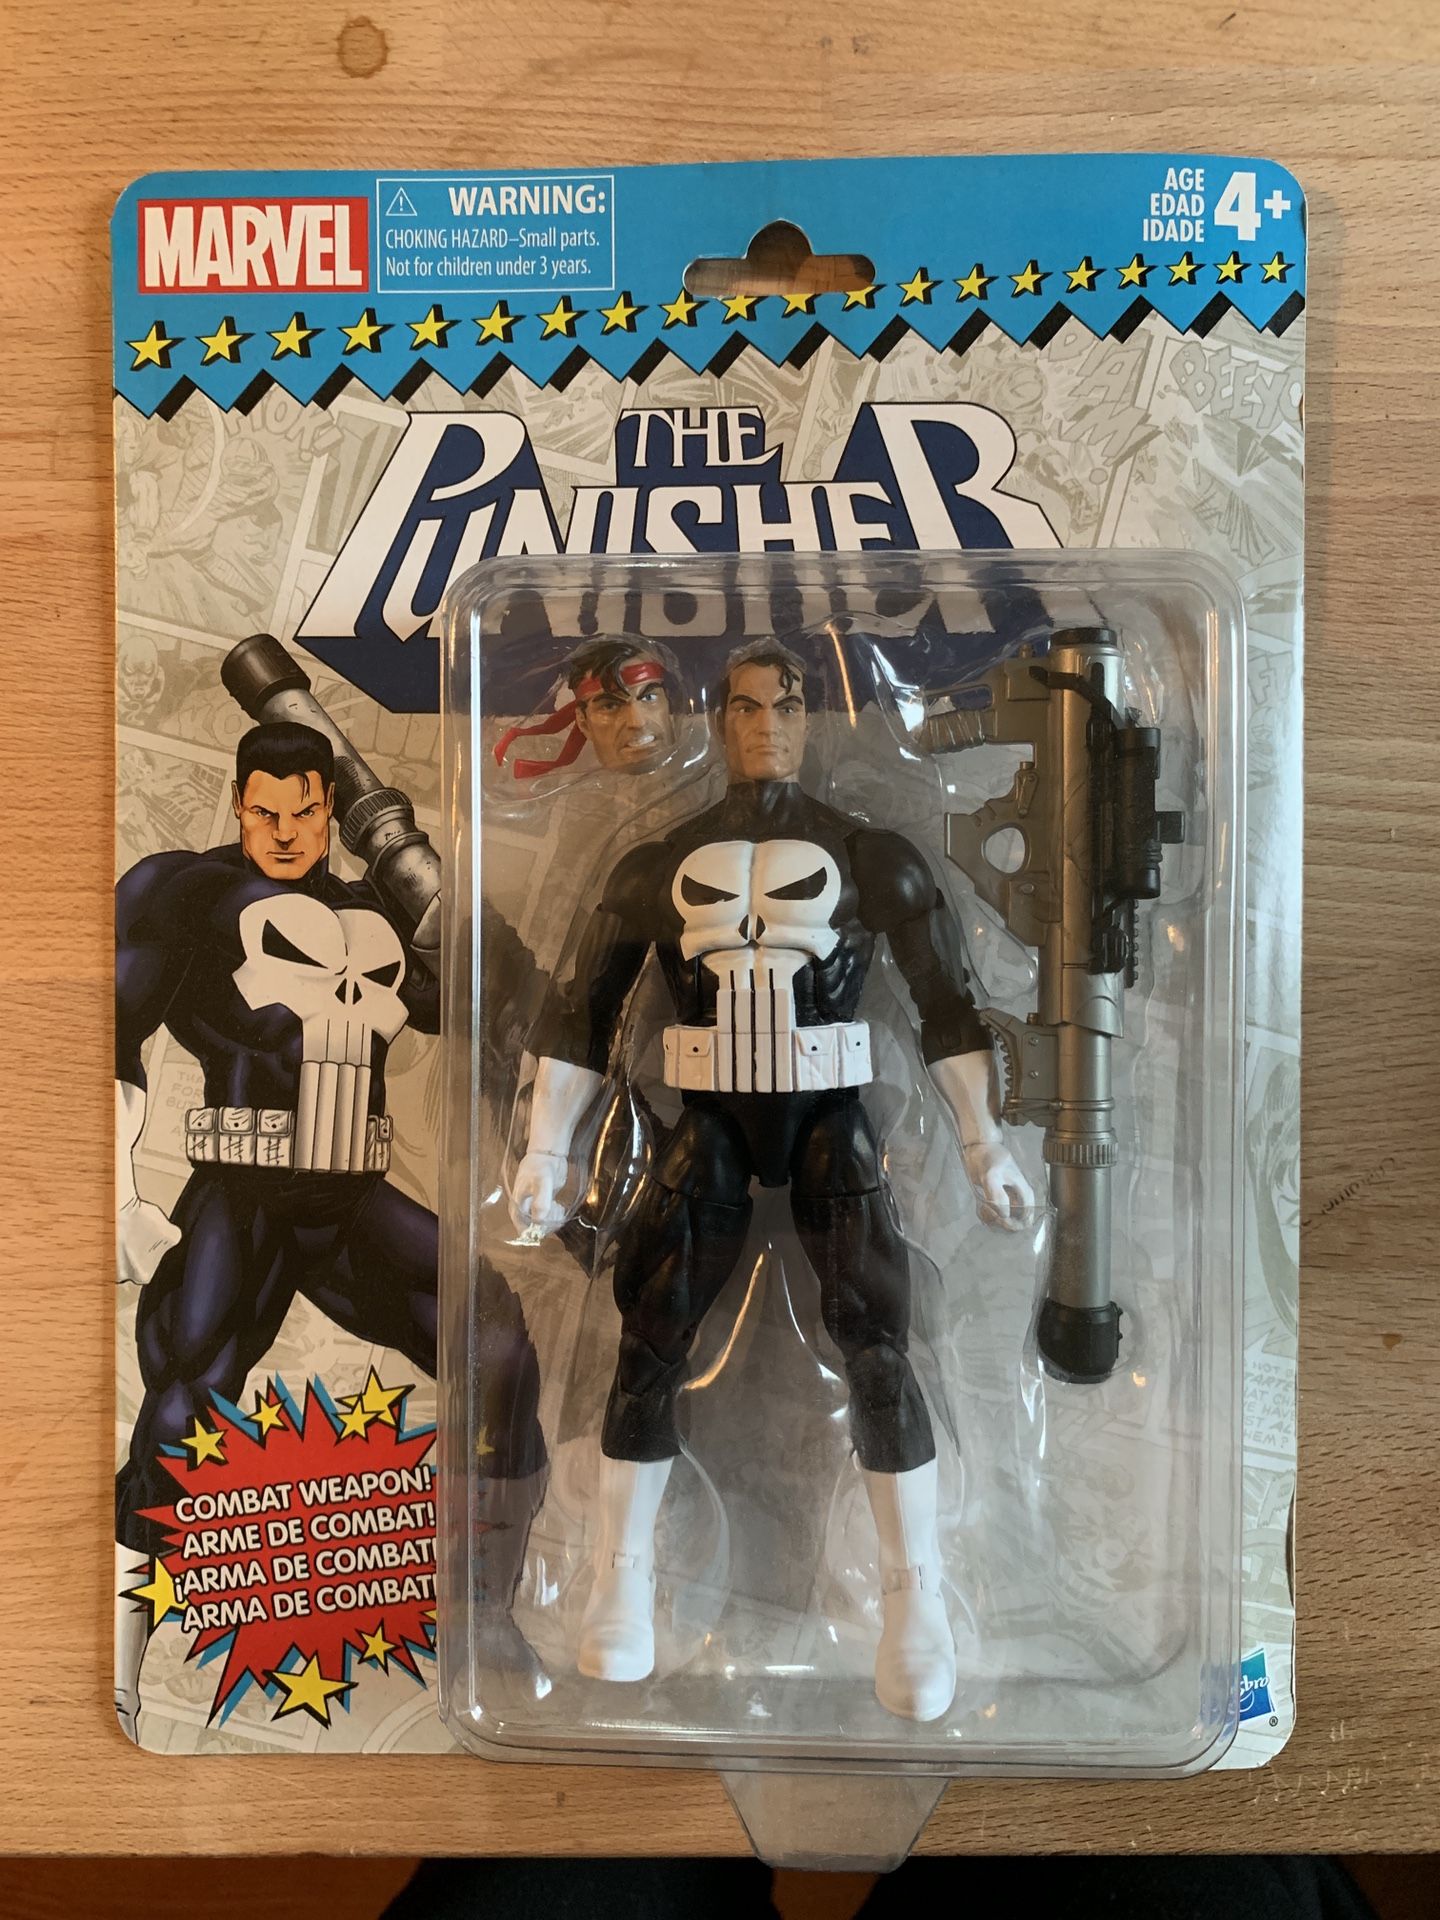 The Punisher Retro Marvel Legends action figure